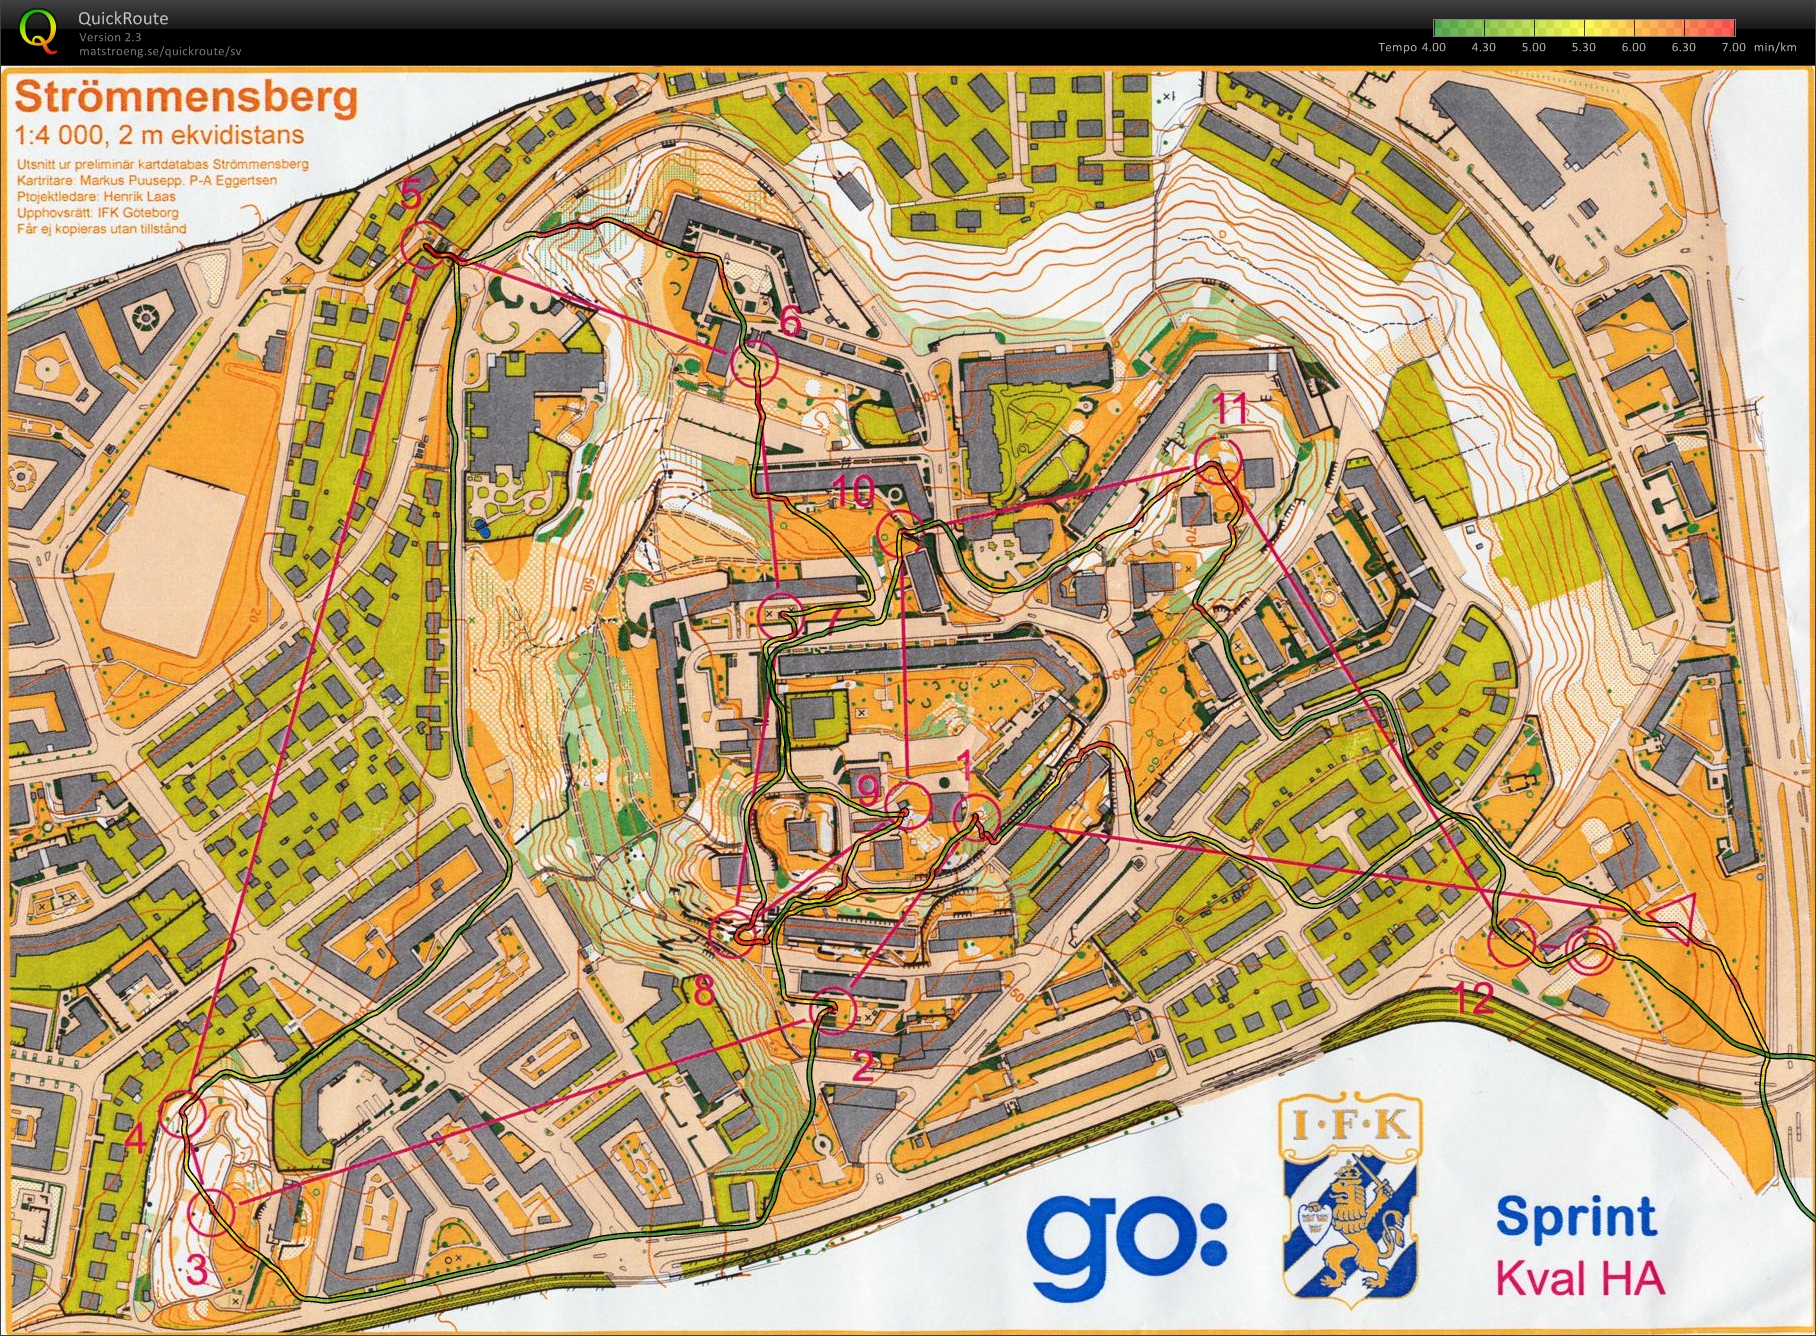 Sprint, kval, Göteborg Open (2011-01-22)